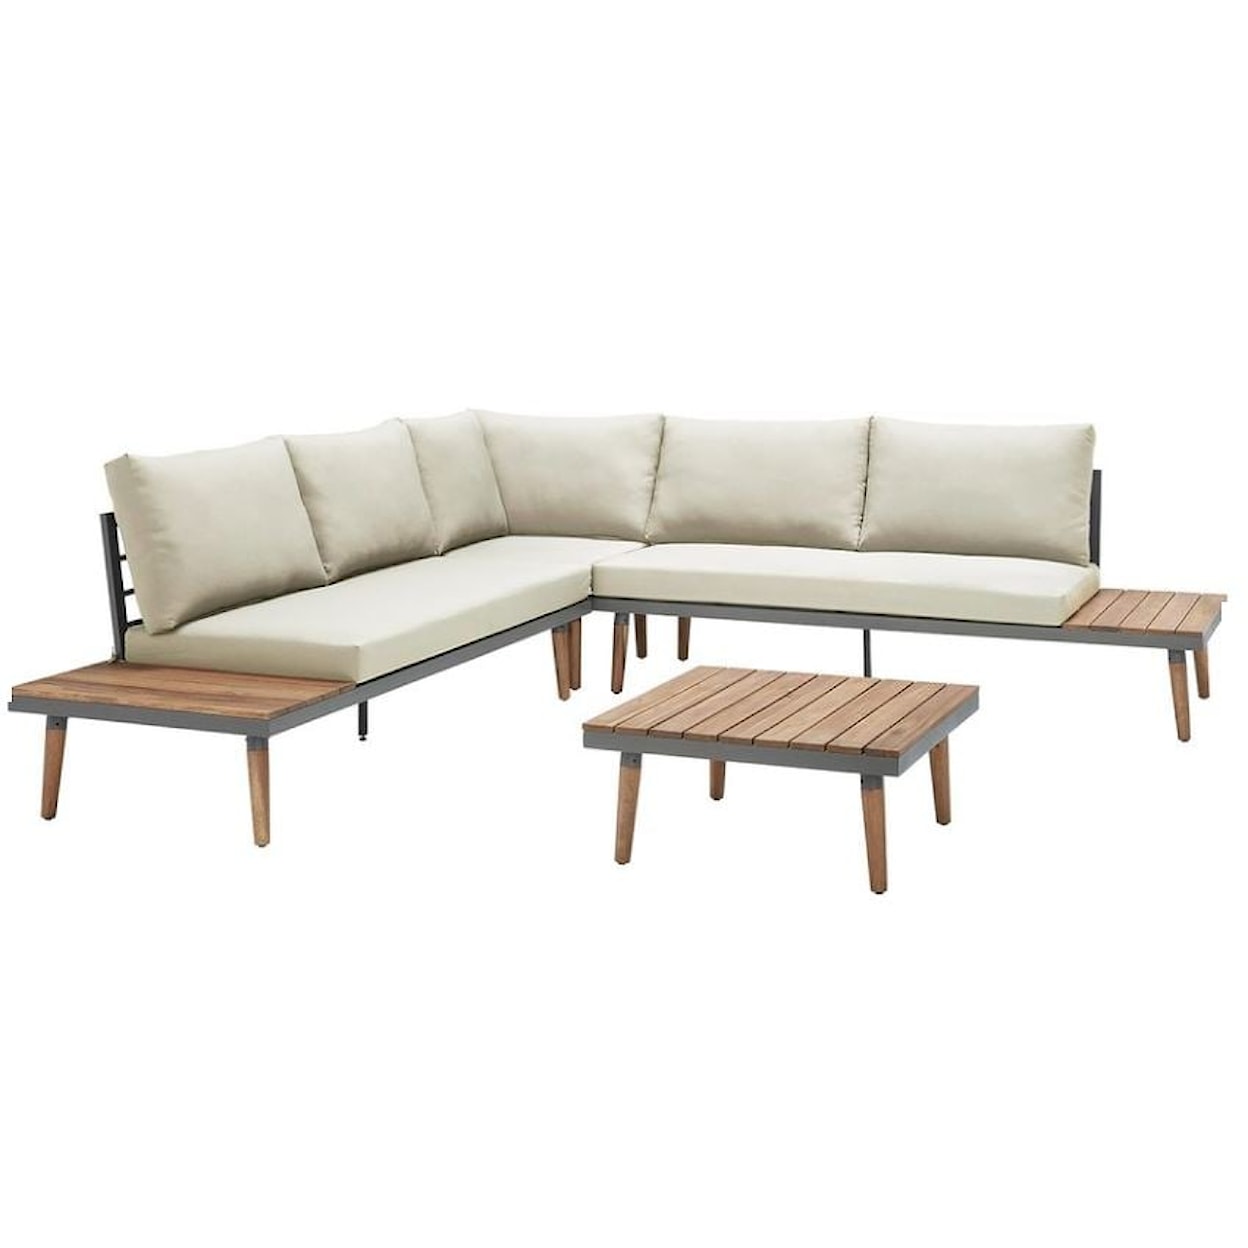 Progressive Furniture Dockside - Only Sold as Set Outdoor Living Group